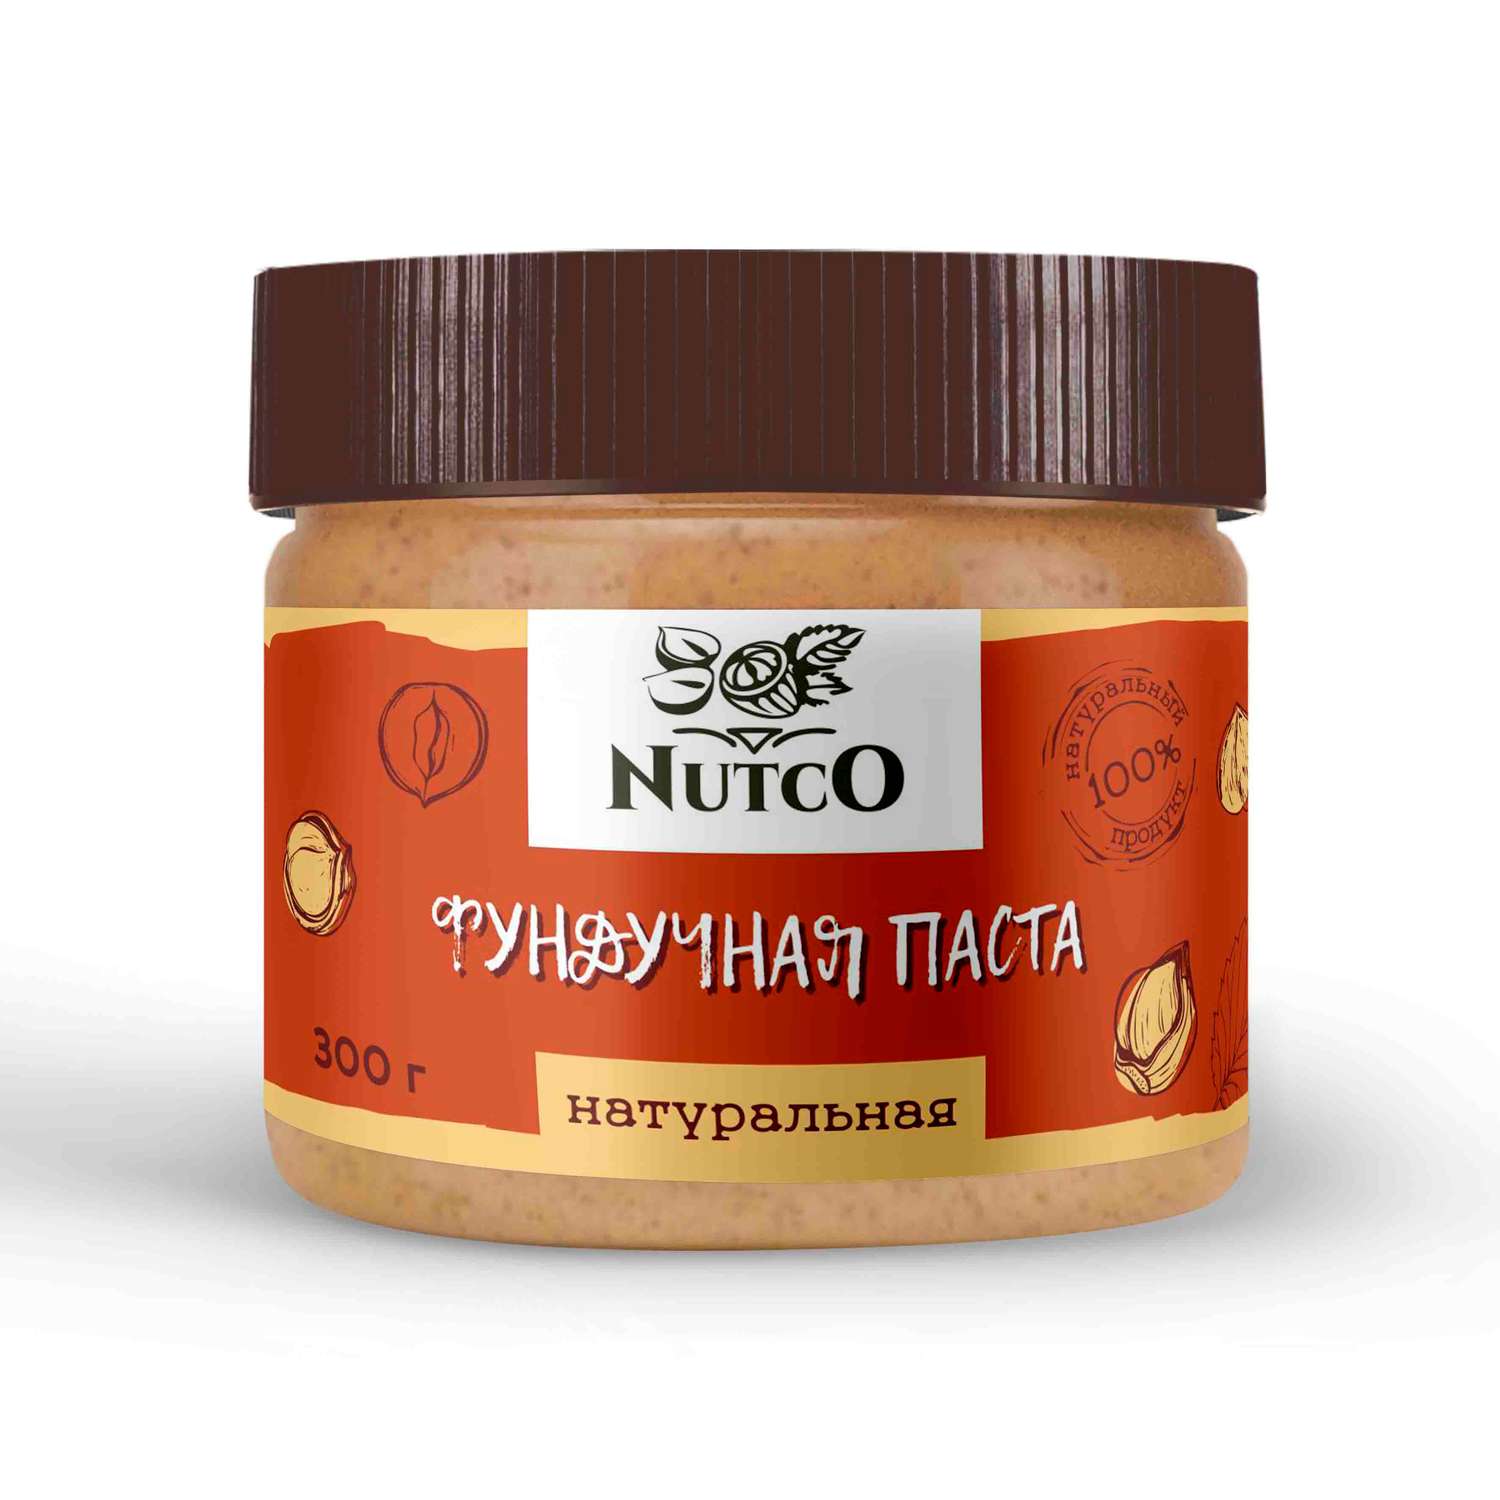 Фундучная паста Nutco натуральная без сахара и добавок - фото 11